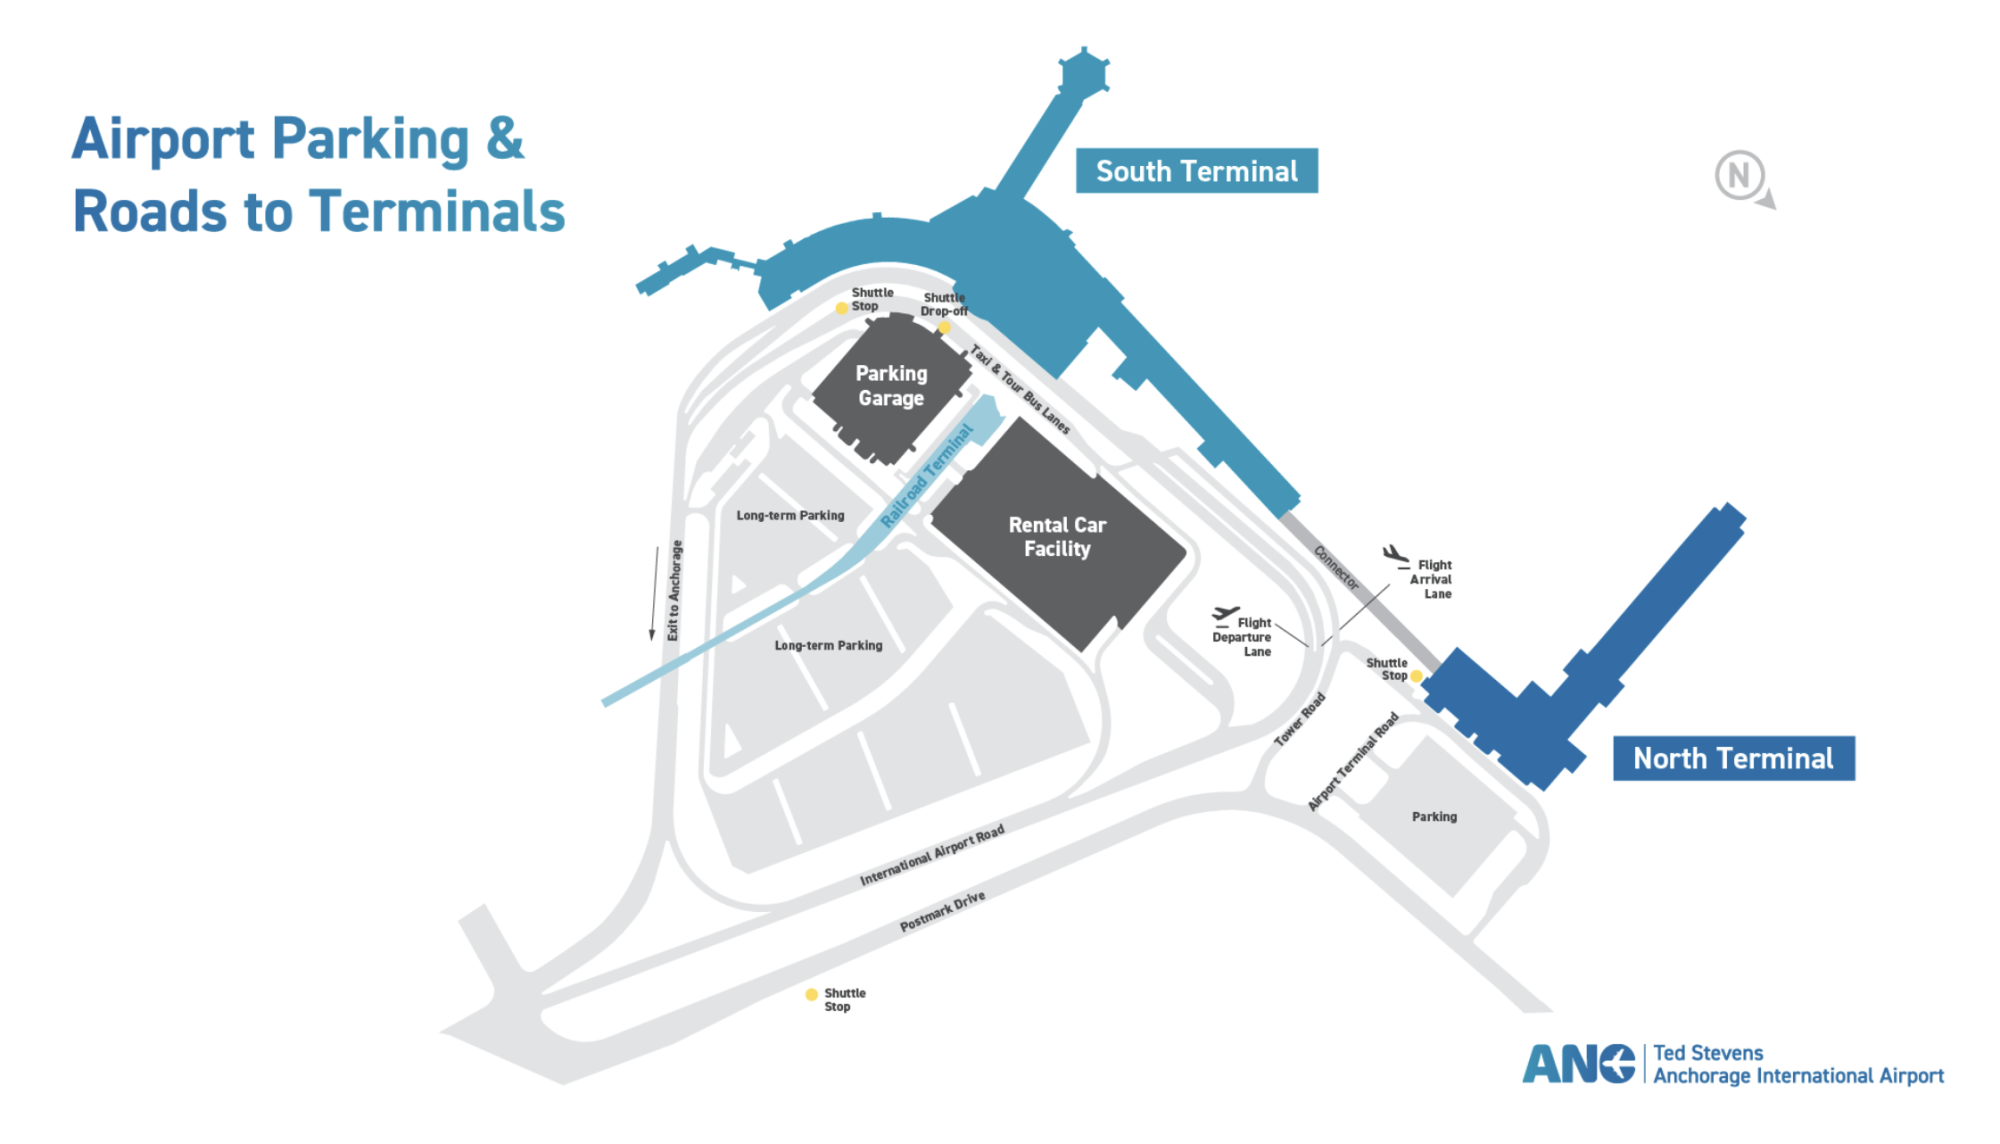 Аэропорт имени Теда Стивенса в Анкоридже. Аэропорт Мале схема. План аэропорта Мале. Схема аэропорта Мале Мальдивы.